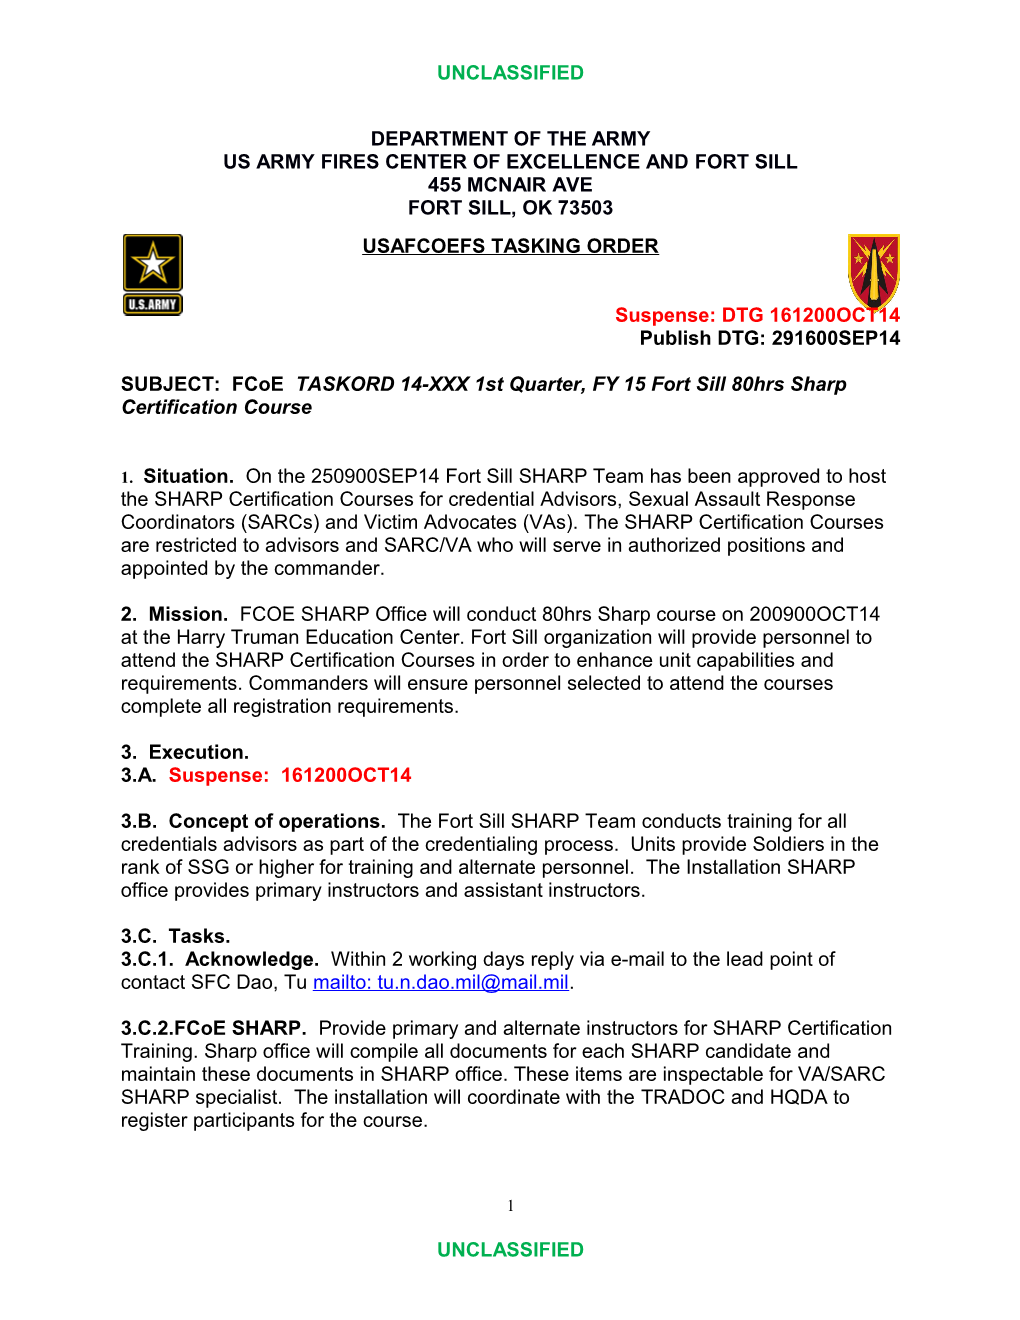 SUBJECT: Fcoe TASKORD 14-XXX 1St Quarter, FY 15 Fort Sill 80Hrs Sharp Certification Course